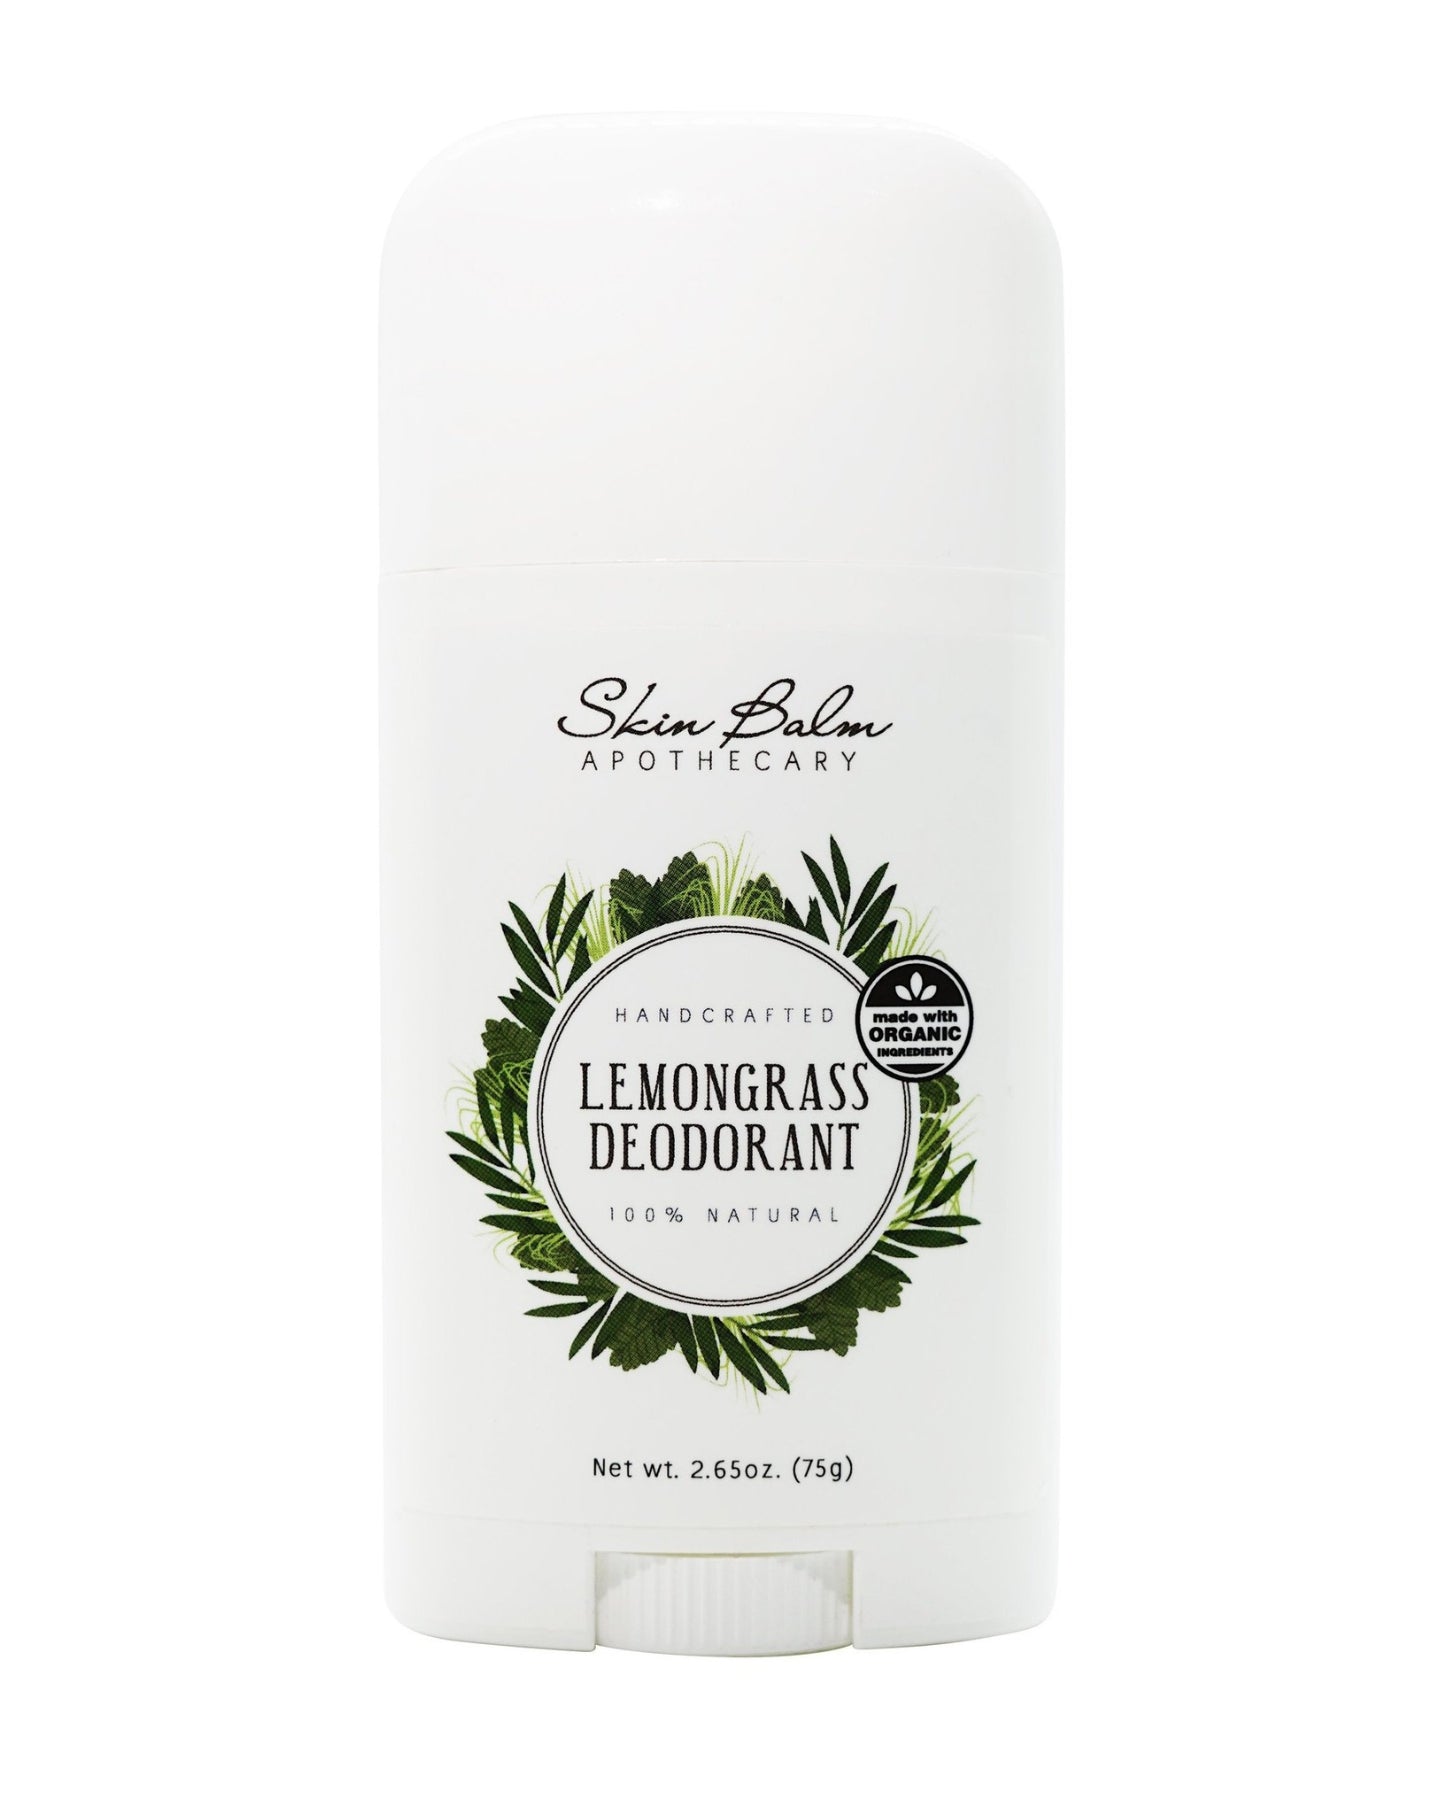 Lemongrass Deodorant against a white background.